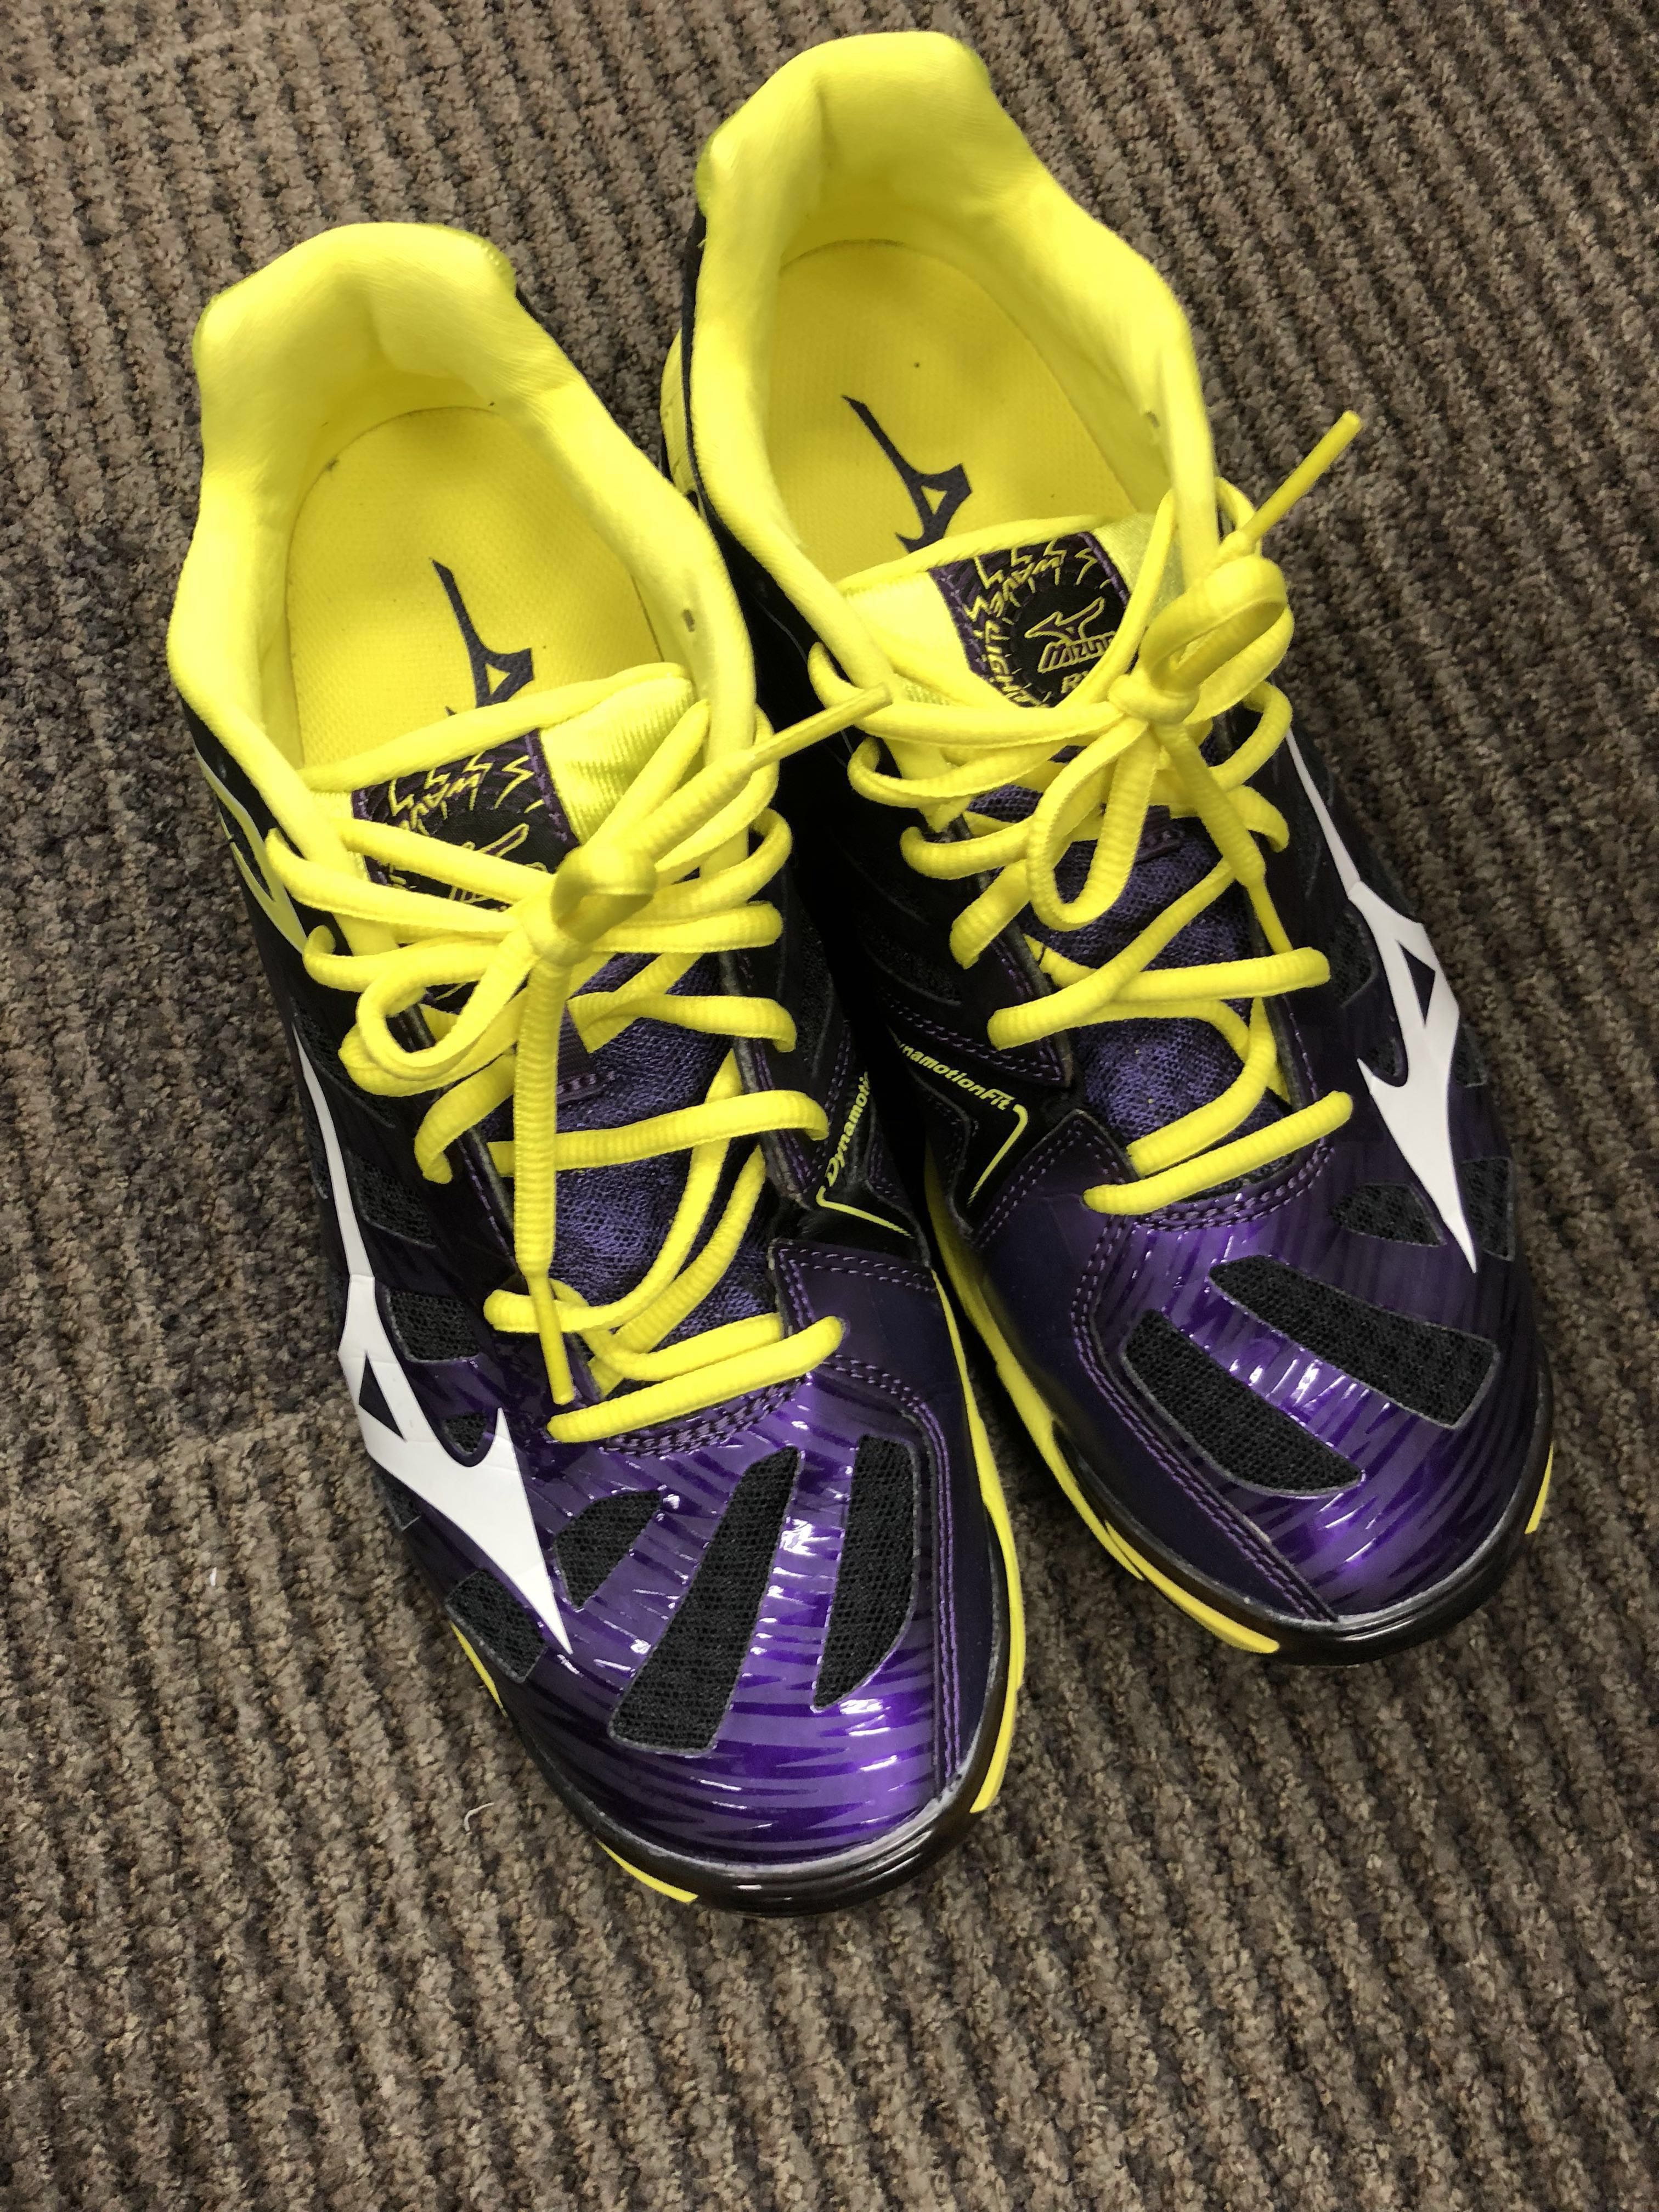 purple mizuno volleyball shoes